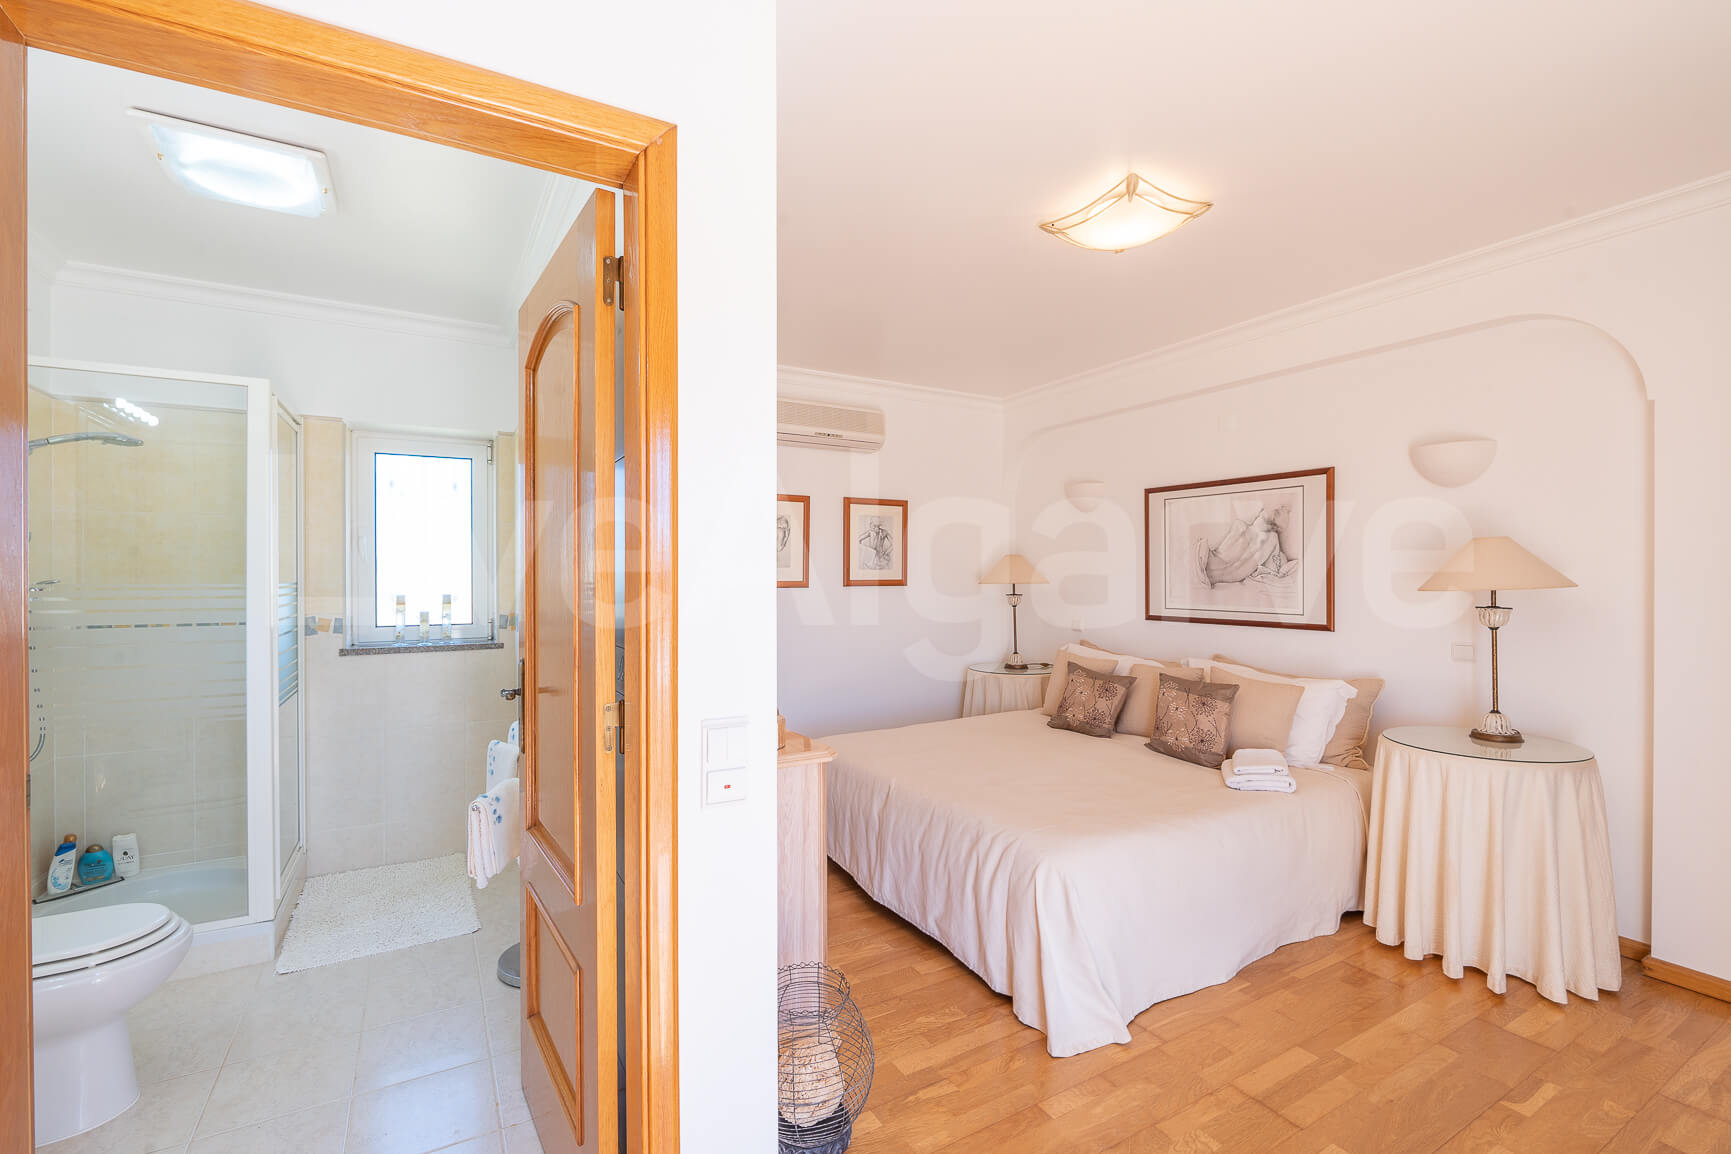 SEA VIEW | Elegant T3+1 Villa at Ferragudo for Sale - Lagoa